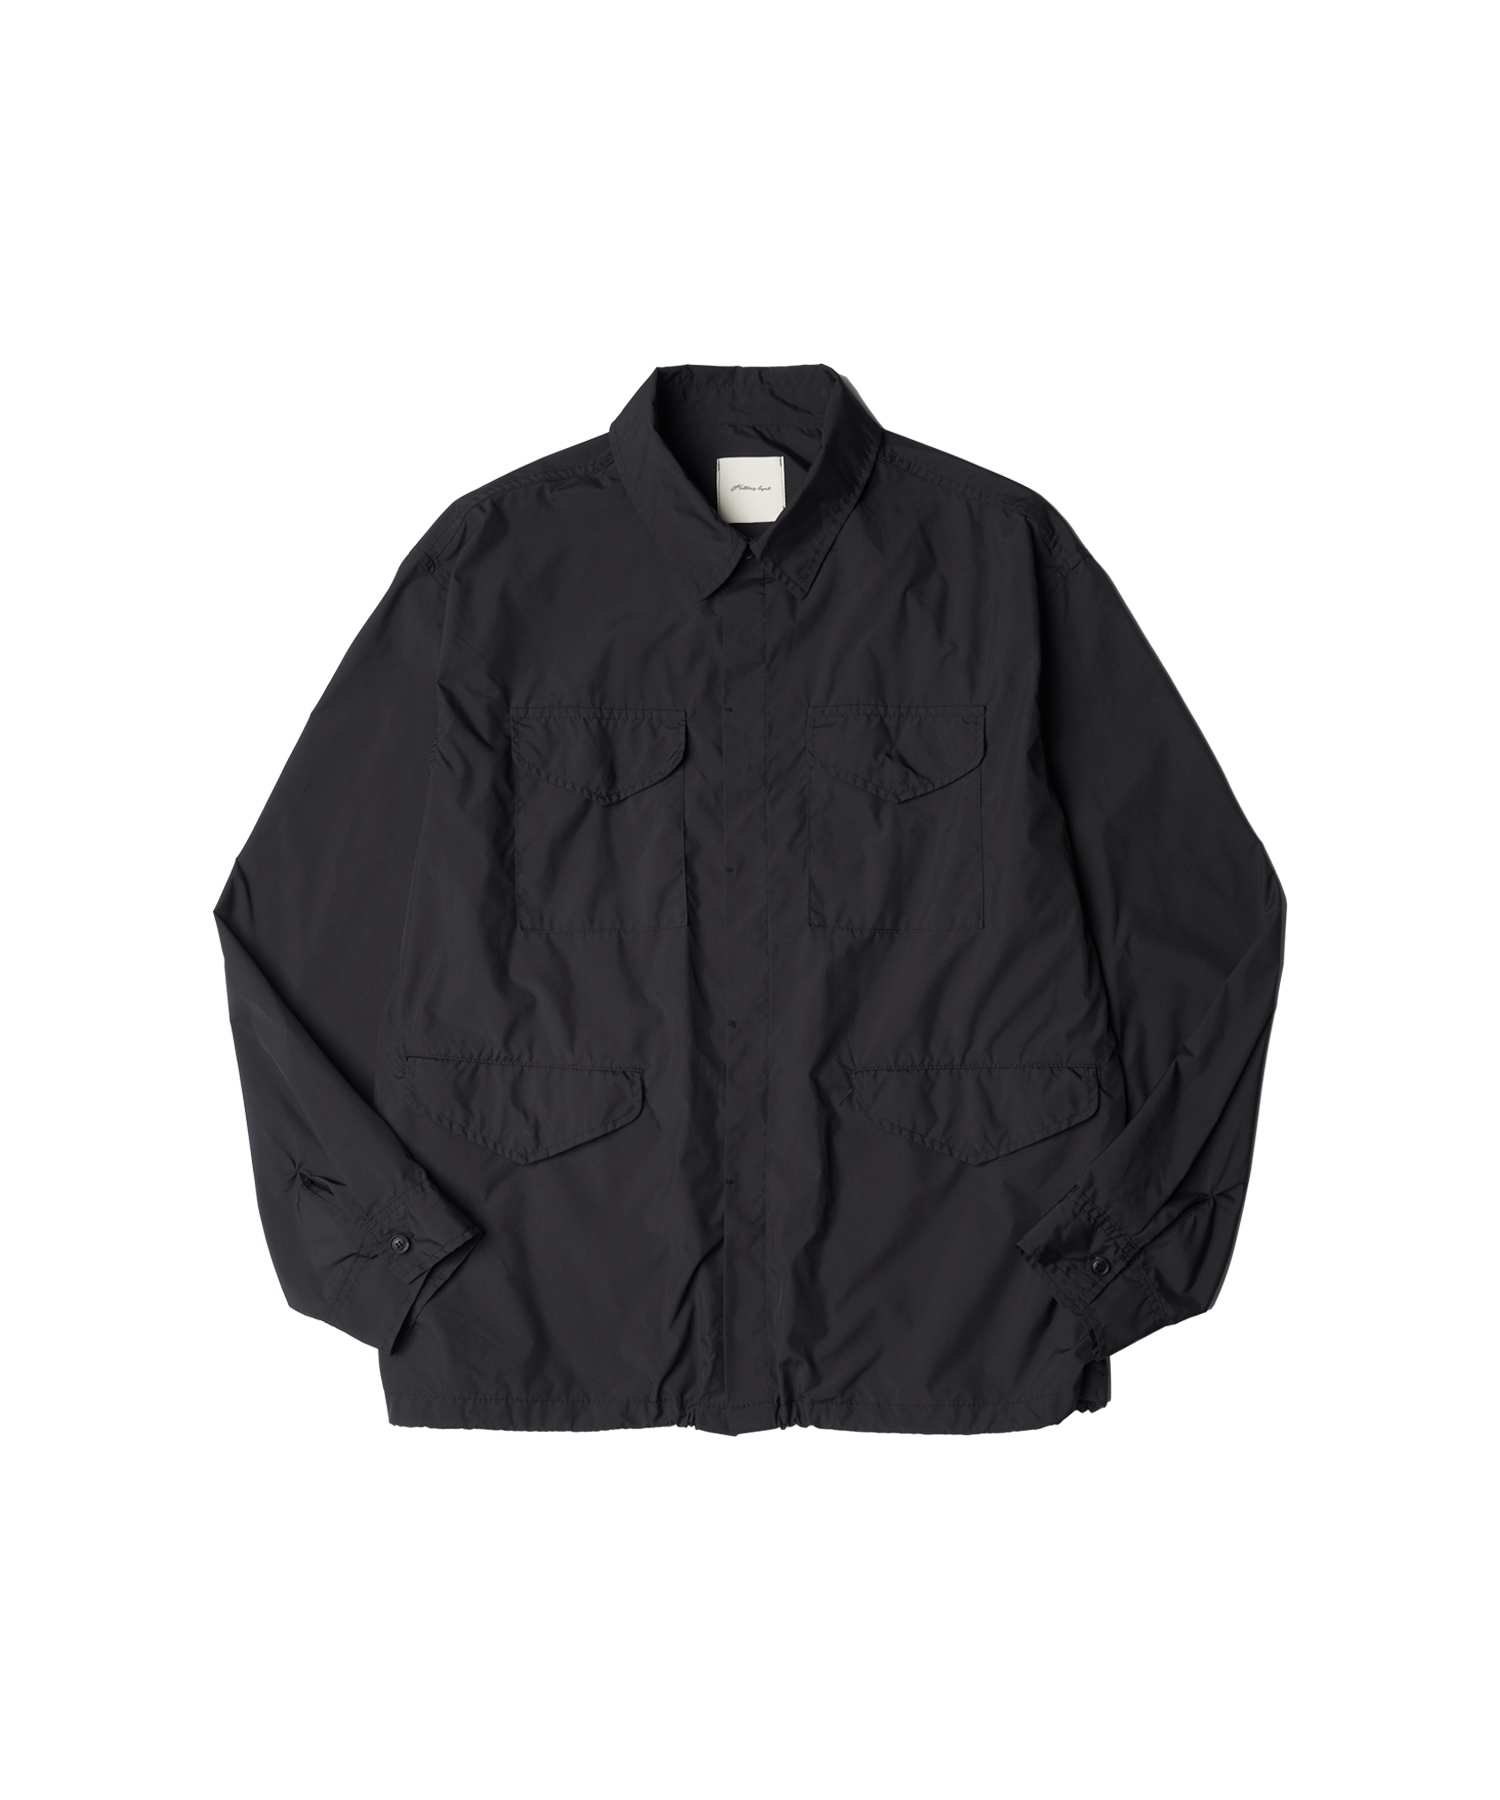 O30007 Military utility jacket_Black